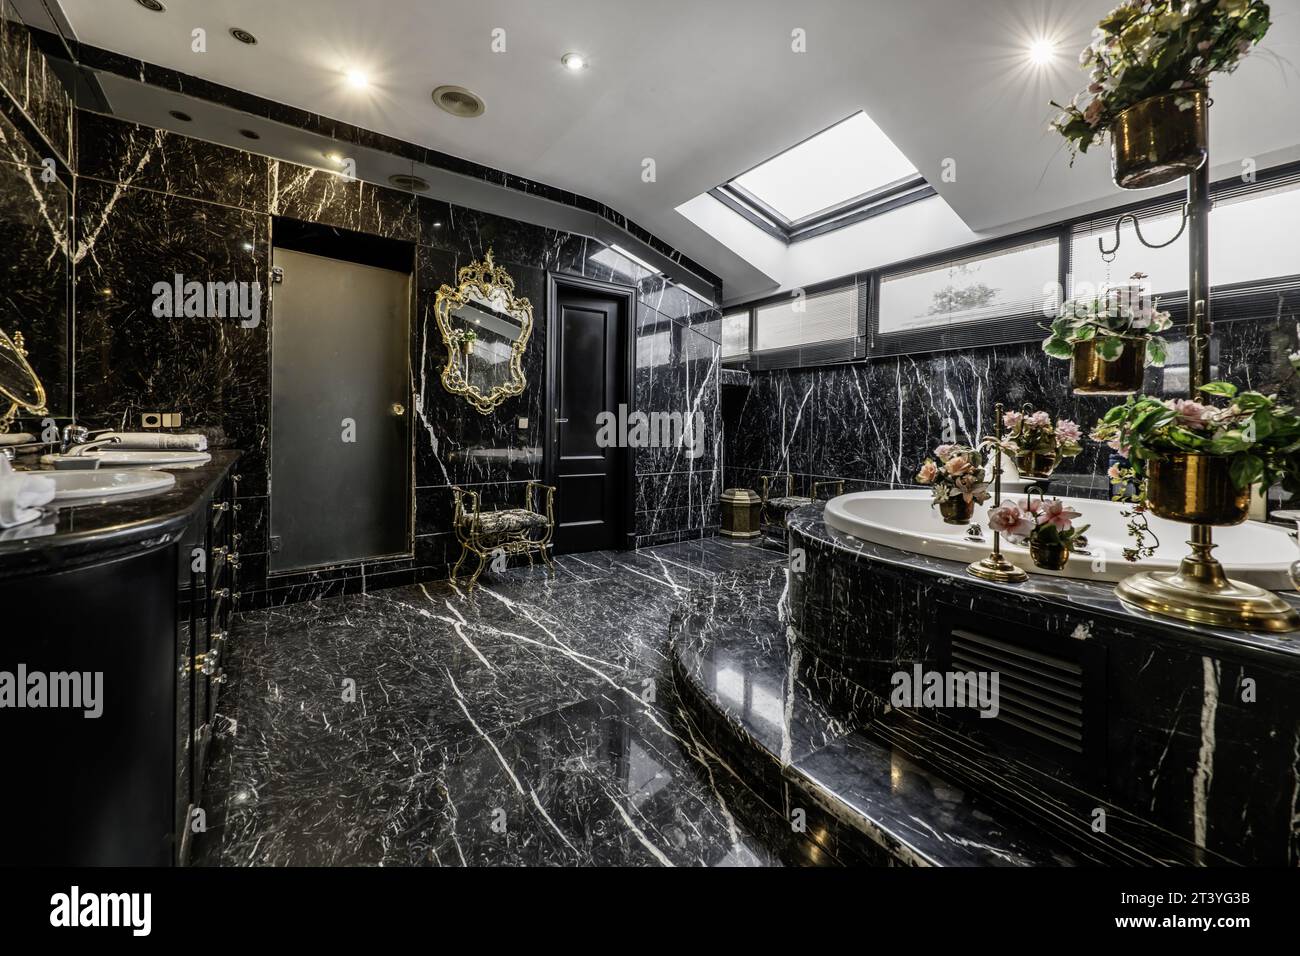 Large bathroom with a circular whirlpool bathtub, all tiled with black marble floors Stock Photo